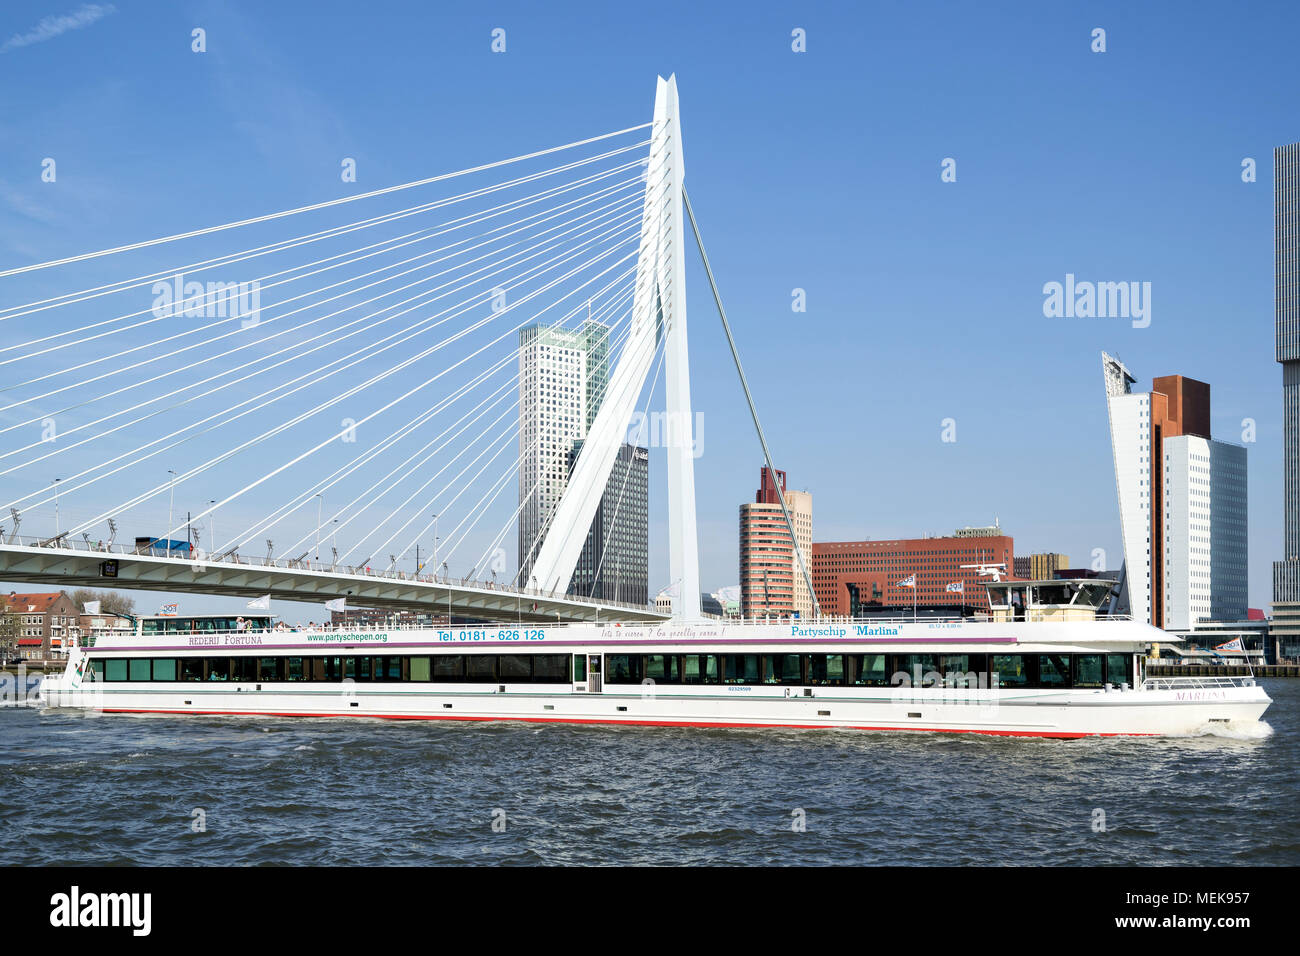 Partito MARLINA in barca sul fiume Nieuwe Maas in Rotterdam, Paesi Bassi Foto Stock